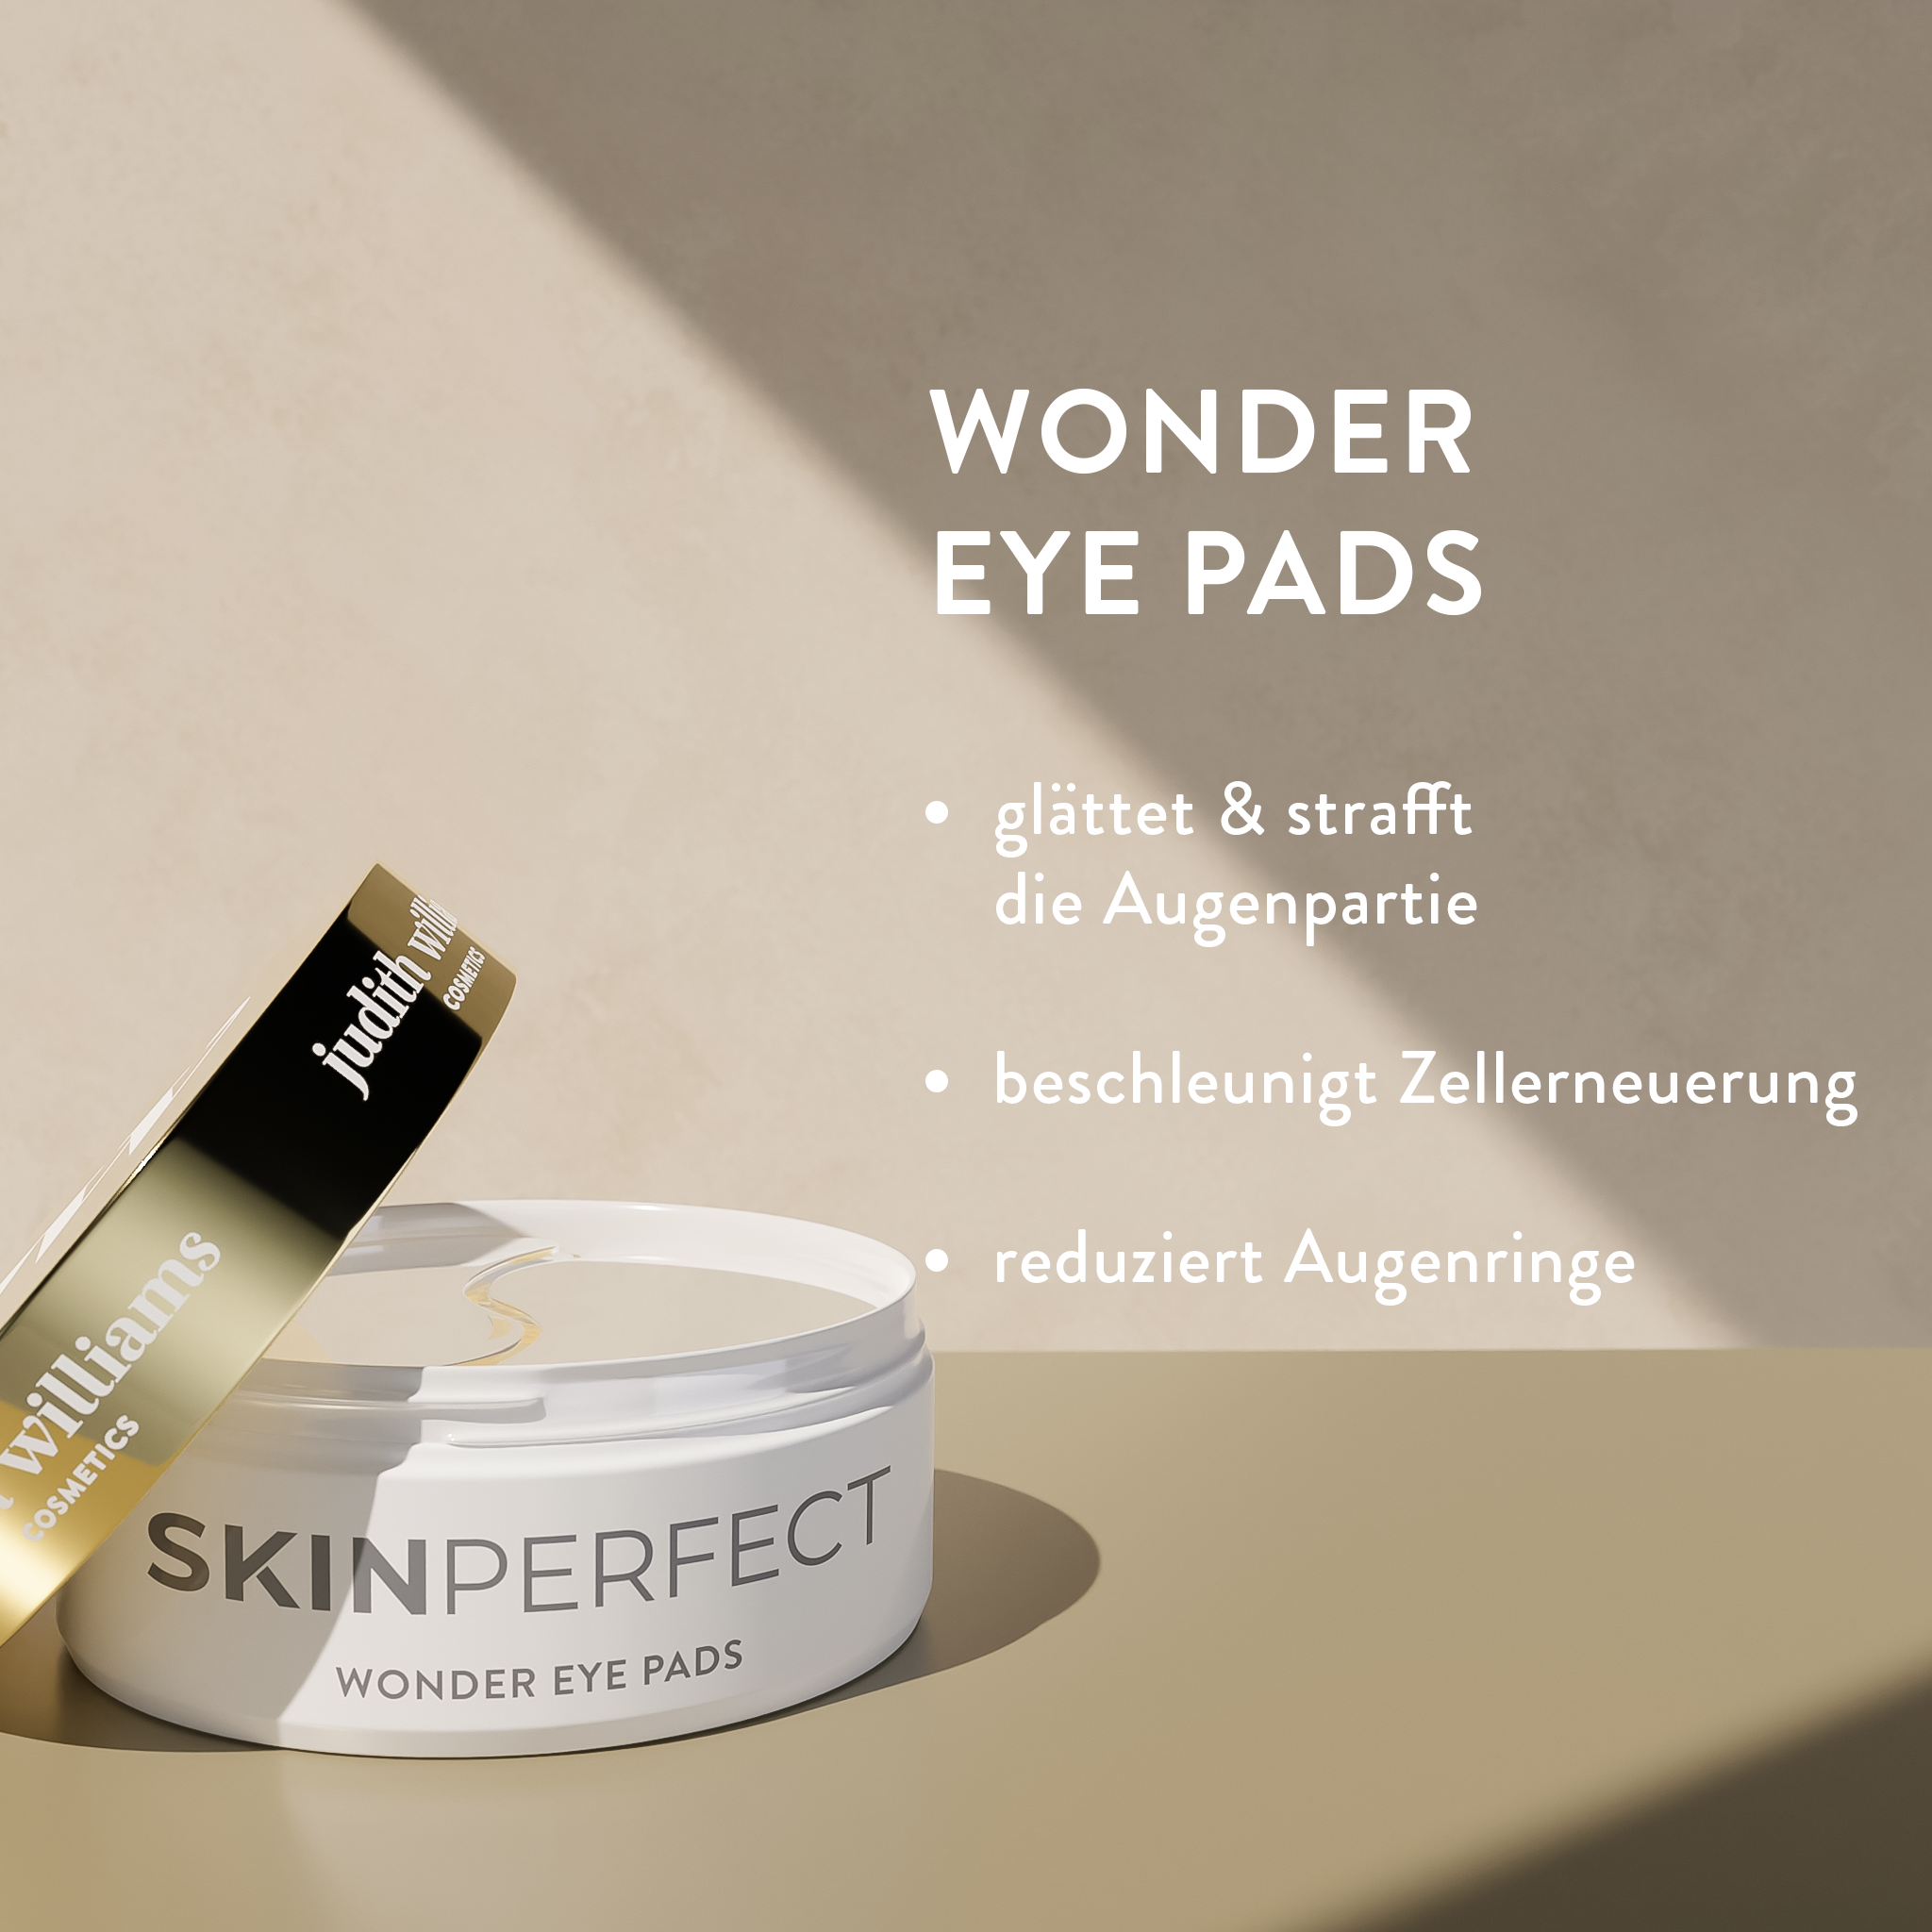 Augenmaske | SkinPerfect | Wonder Eye Pads | Judith Williams